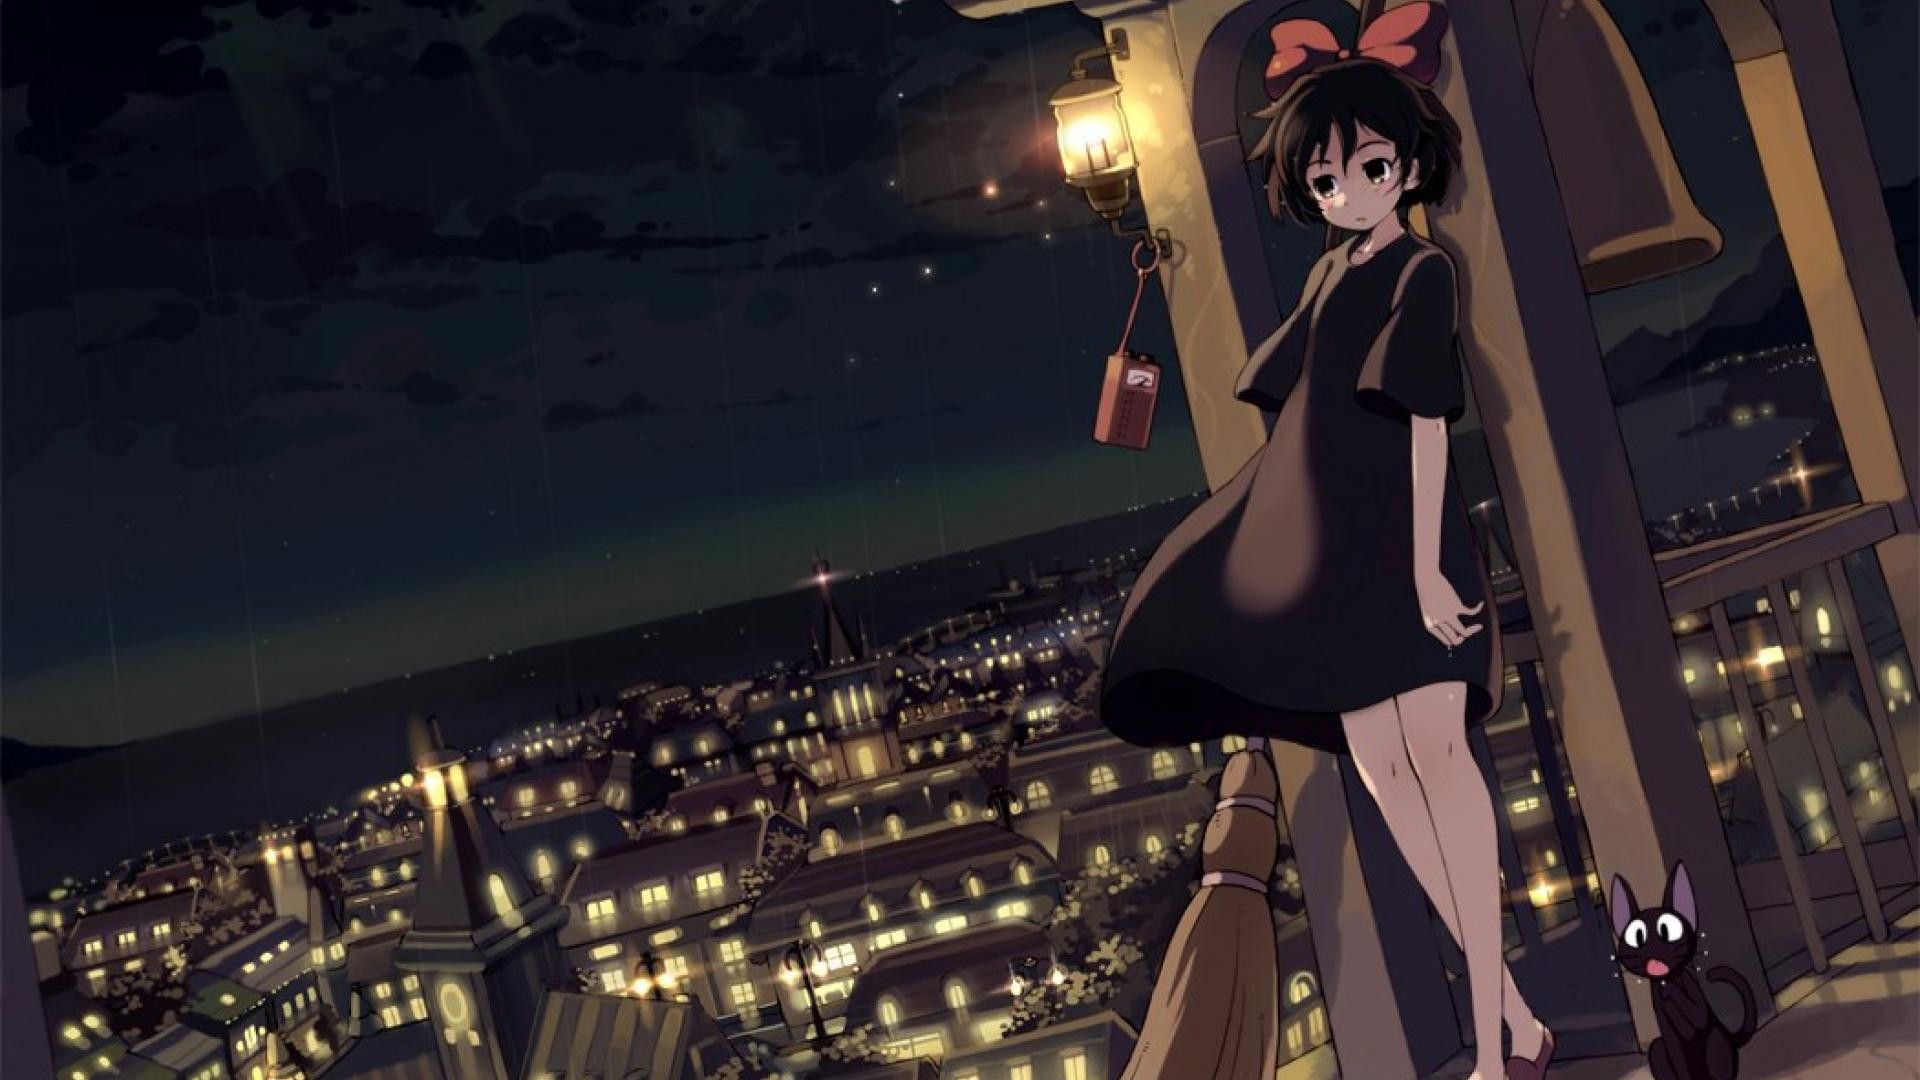 Anime 1920x1080 Studio Ghibli Kiki's Delivery Service anime girls cityscape lantern night rain cats dark hair dark eyes anime